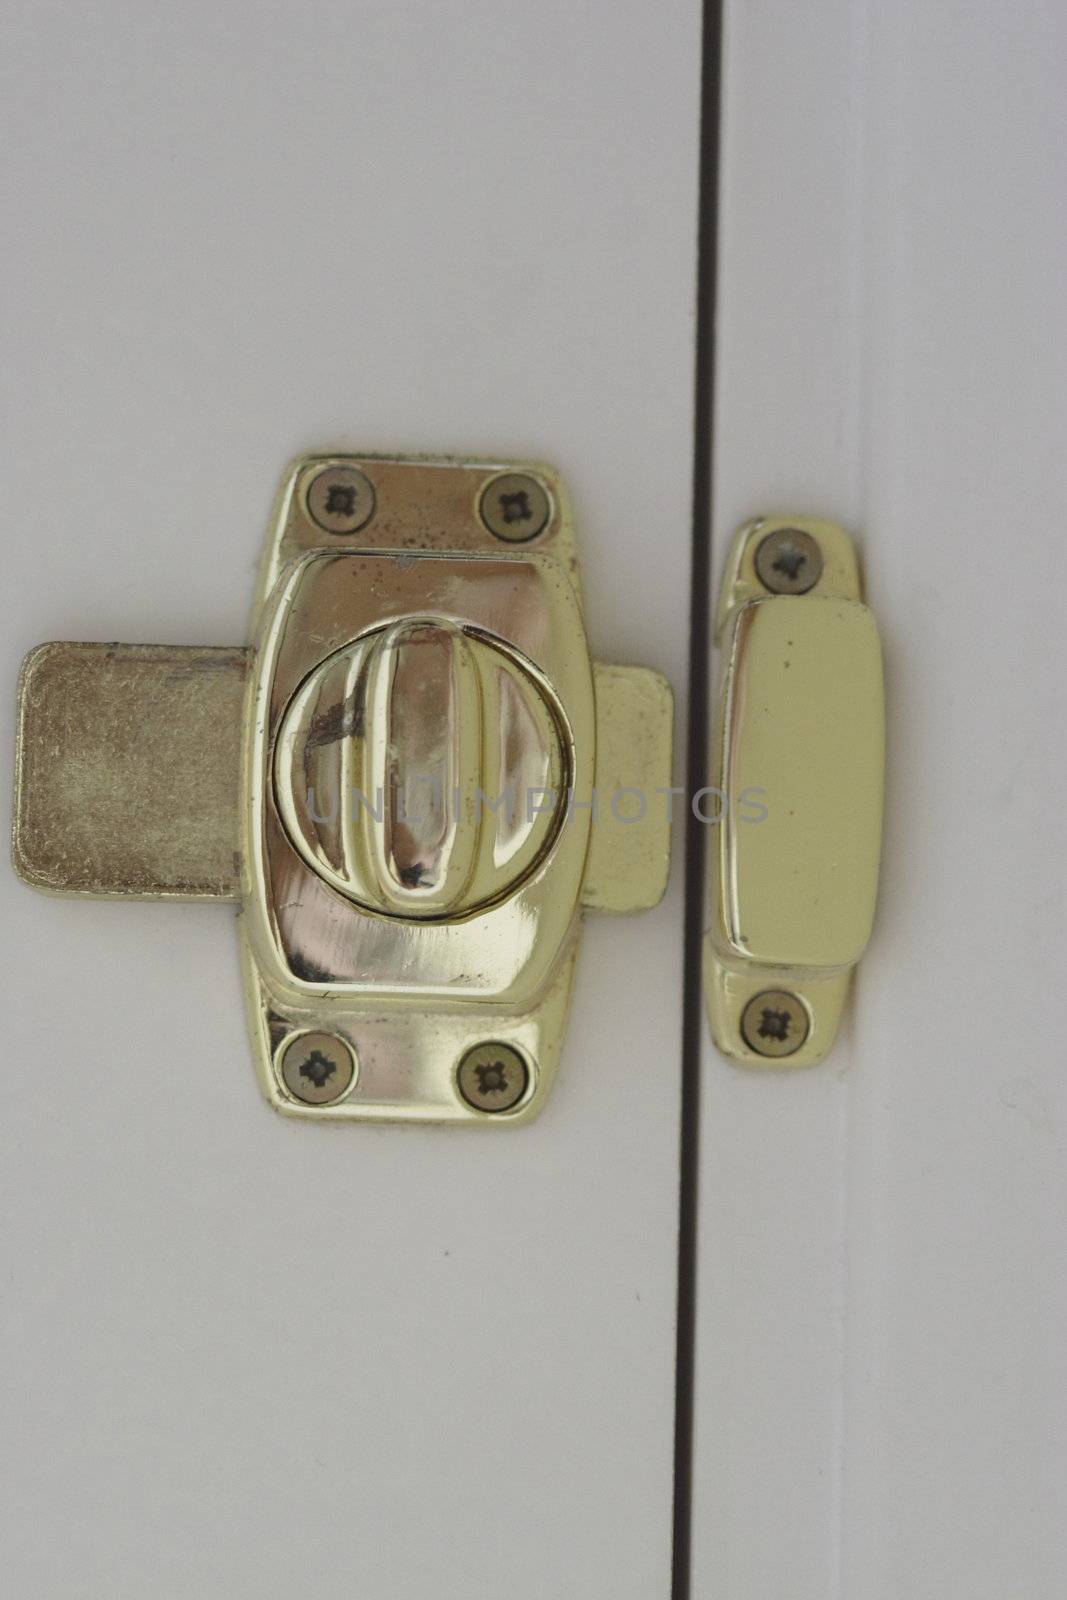 brass door lock the type used on a bathroom 